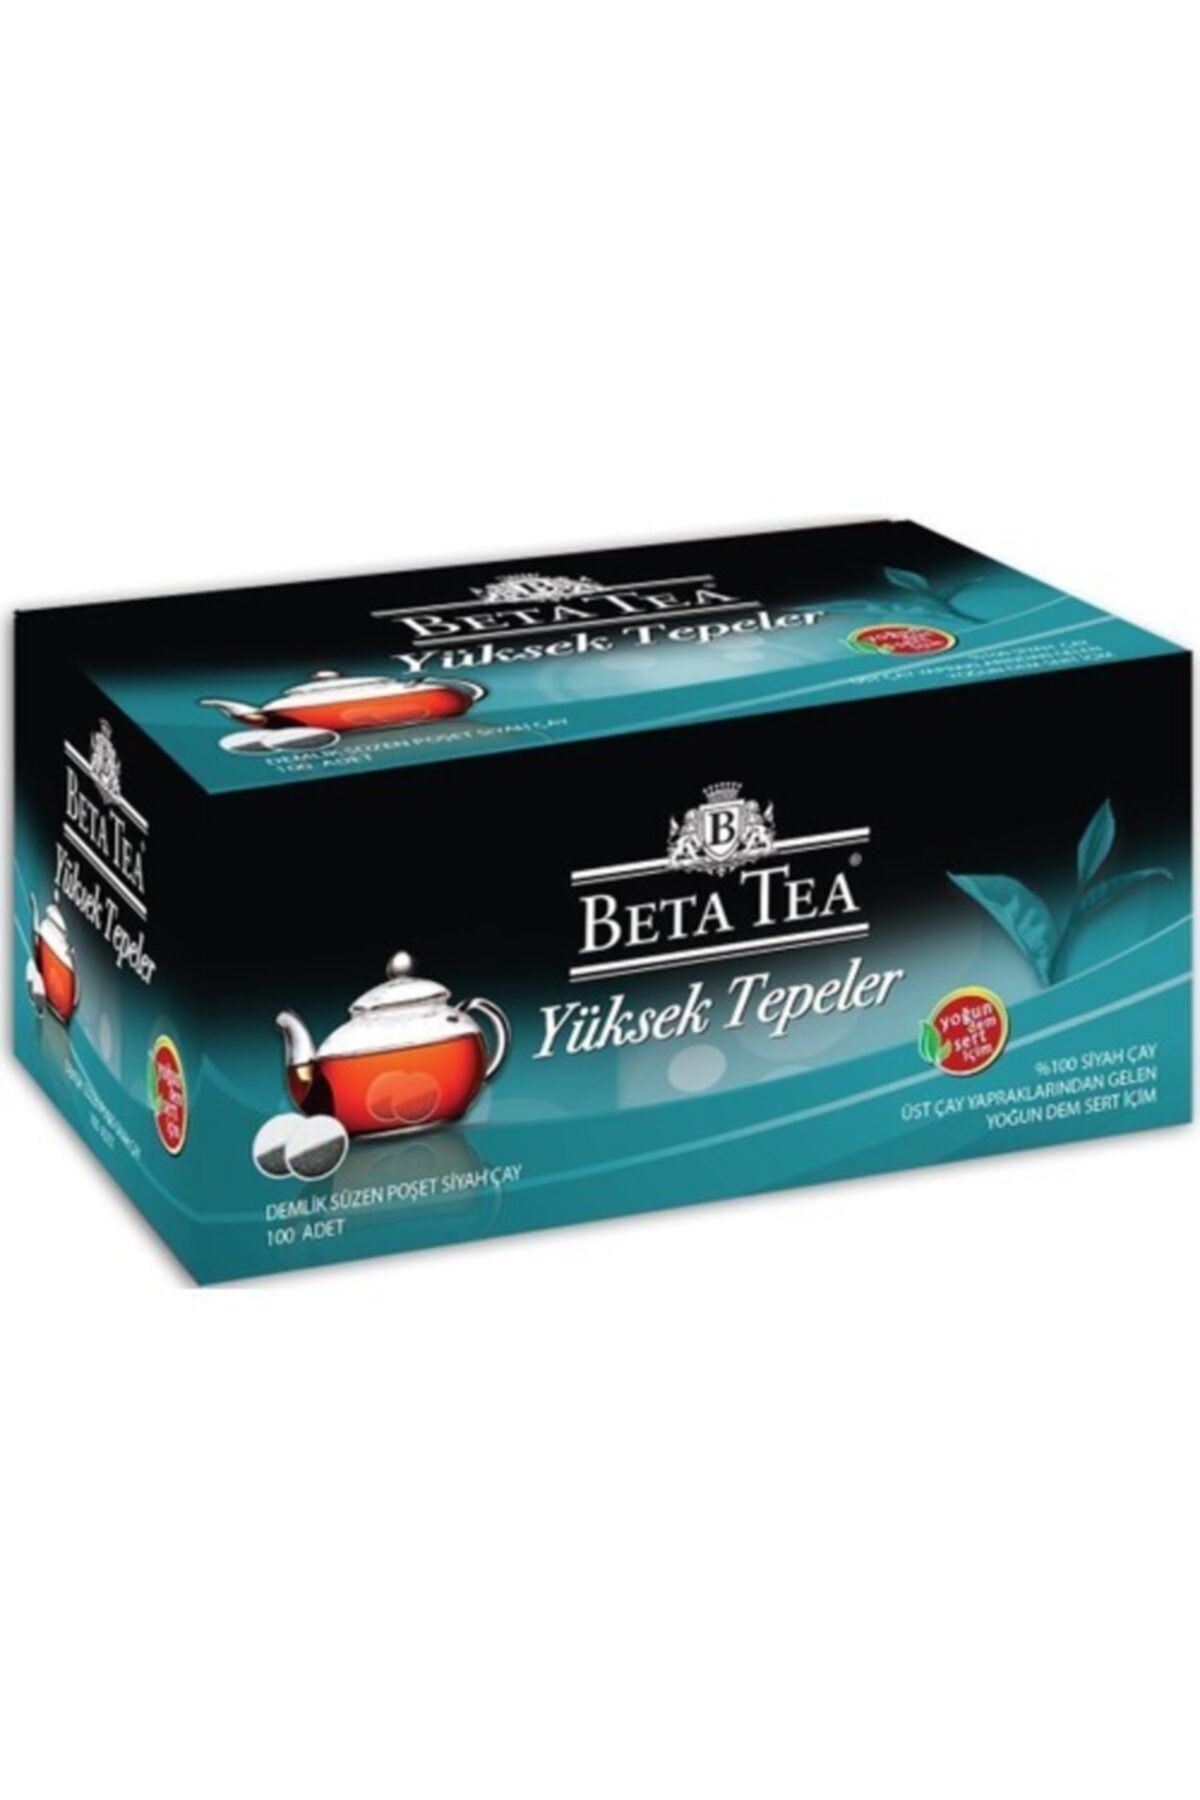 Beta Tea Yüksek Tepeler Demlik Poşet Çay 100 X 3.2 G